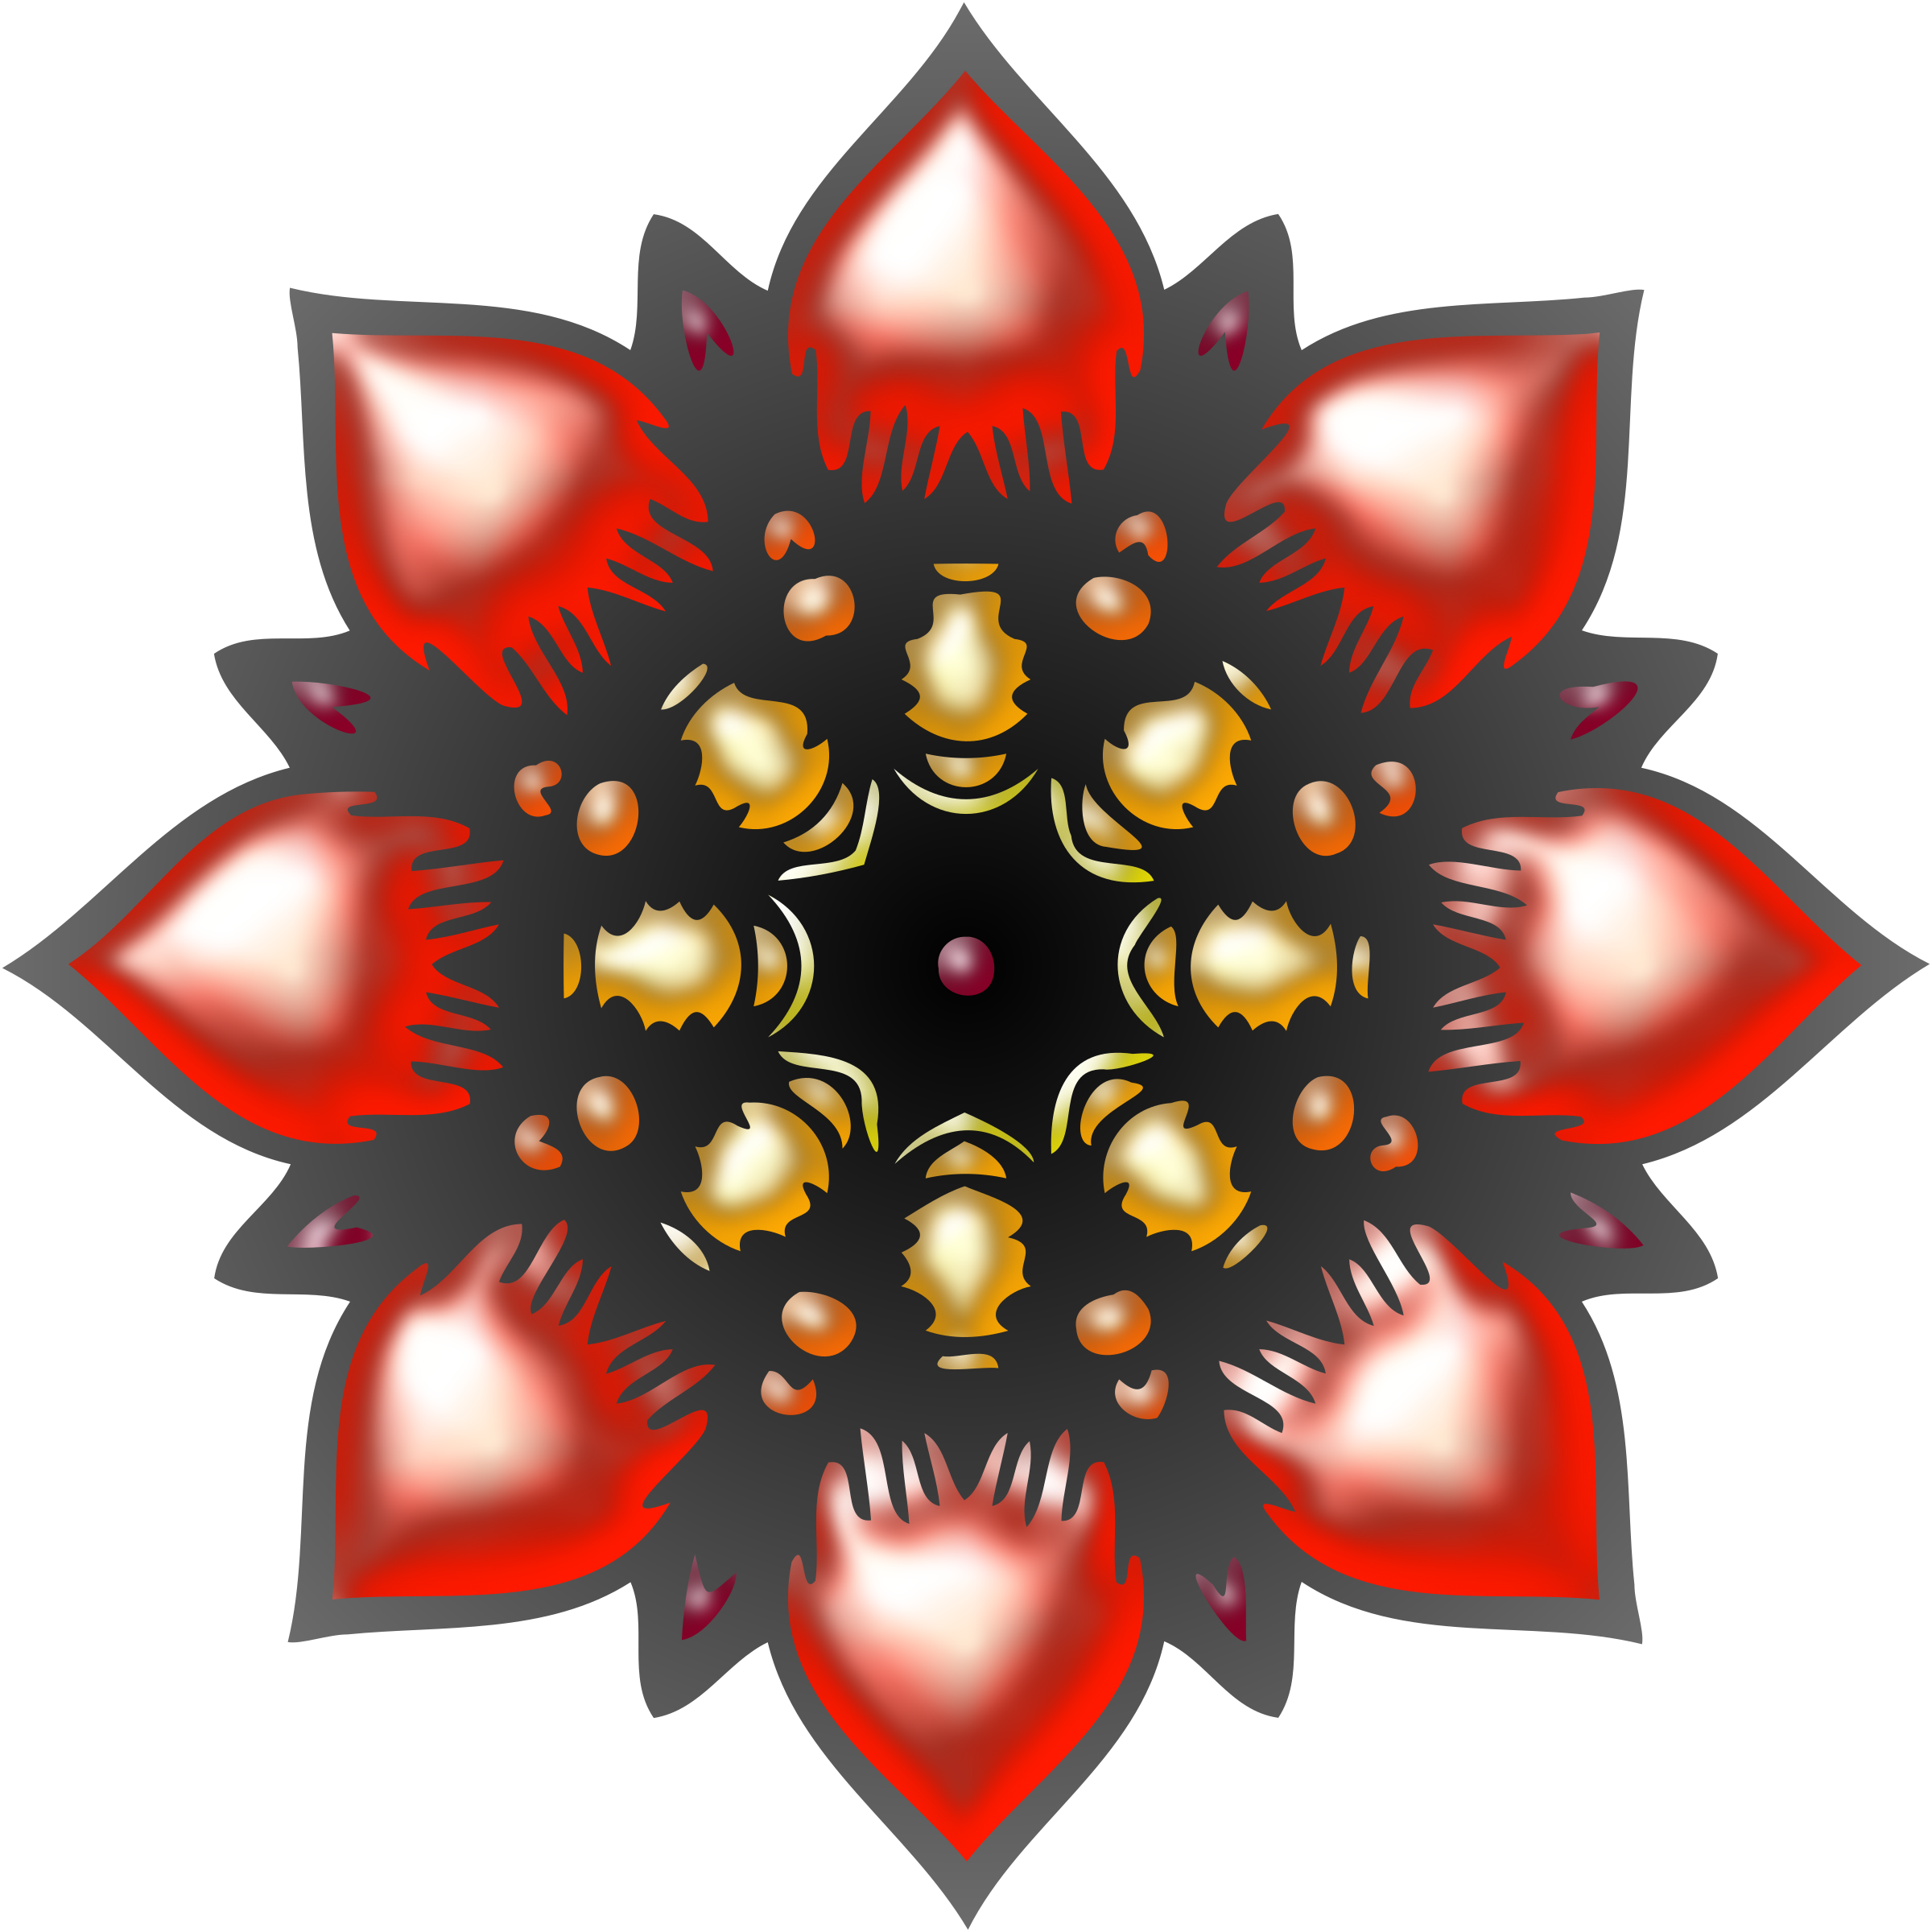 Abstract Flower 3 - Pago Con Tarjeta Kiwi (2400x2400)